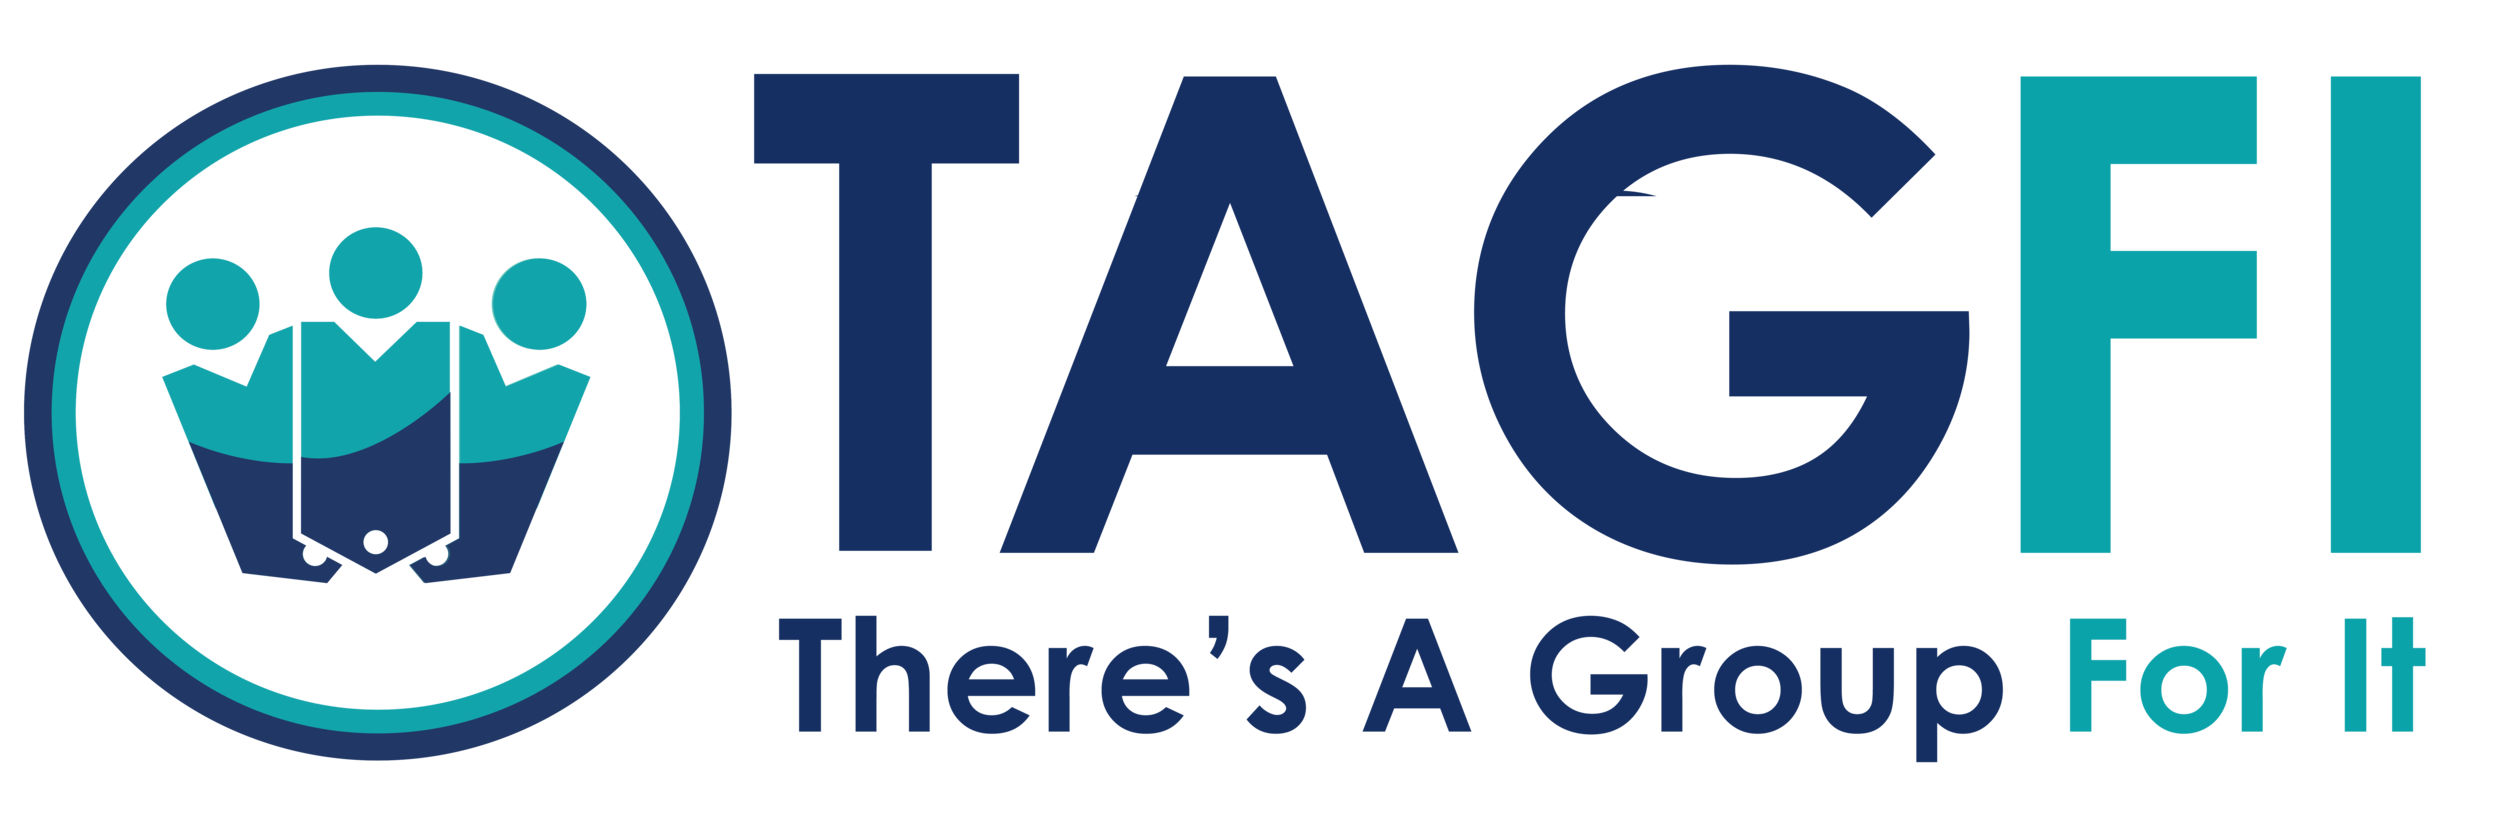 TagFi-logo-allcaps-supermax.png